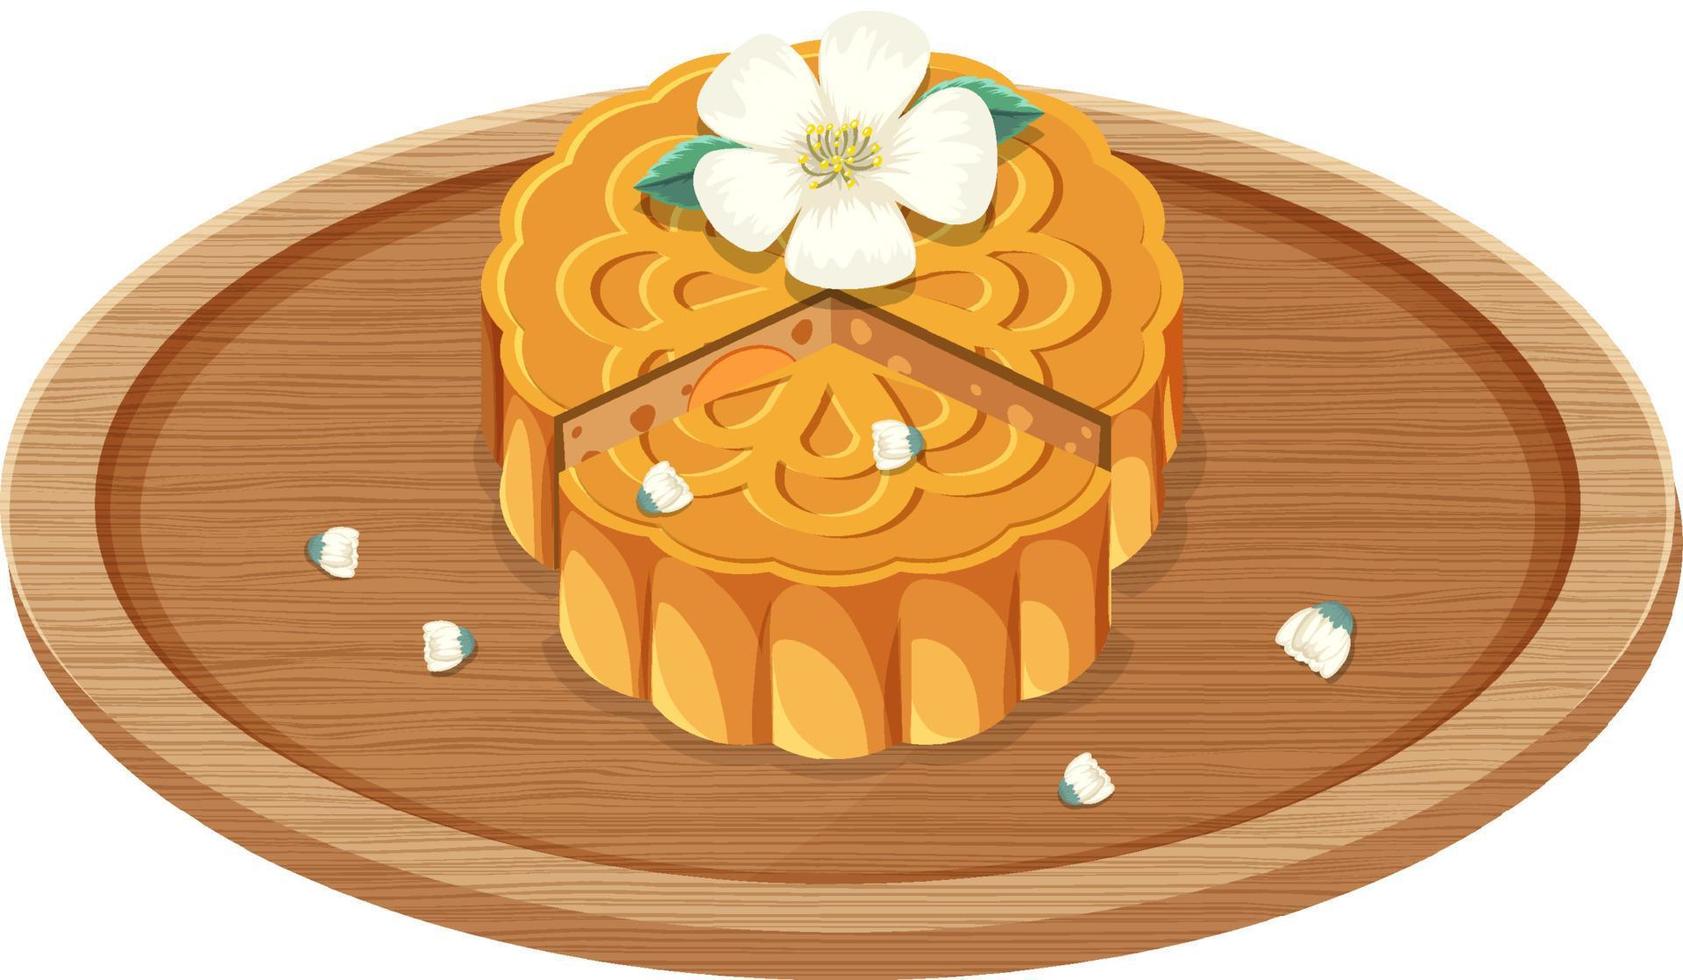 Flower mooncake on wooden plate vector